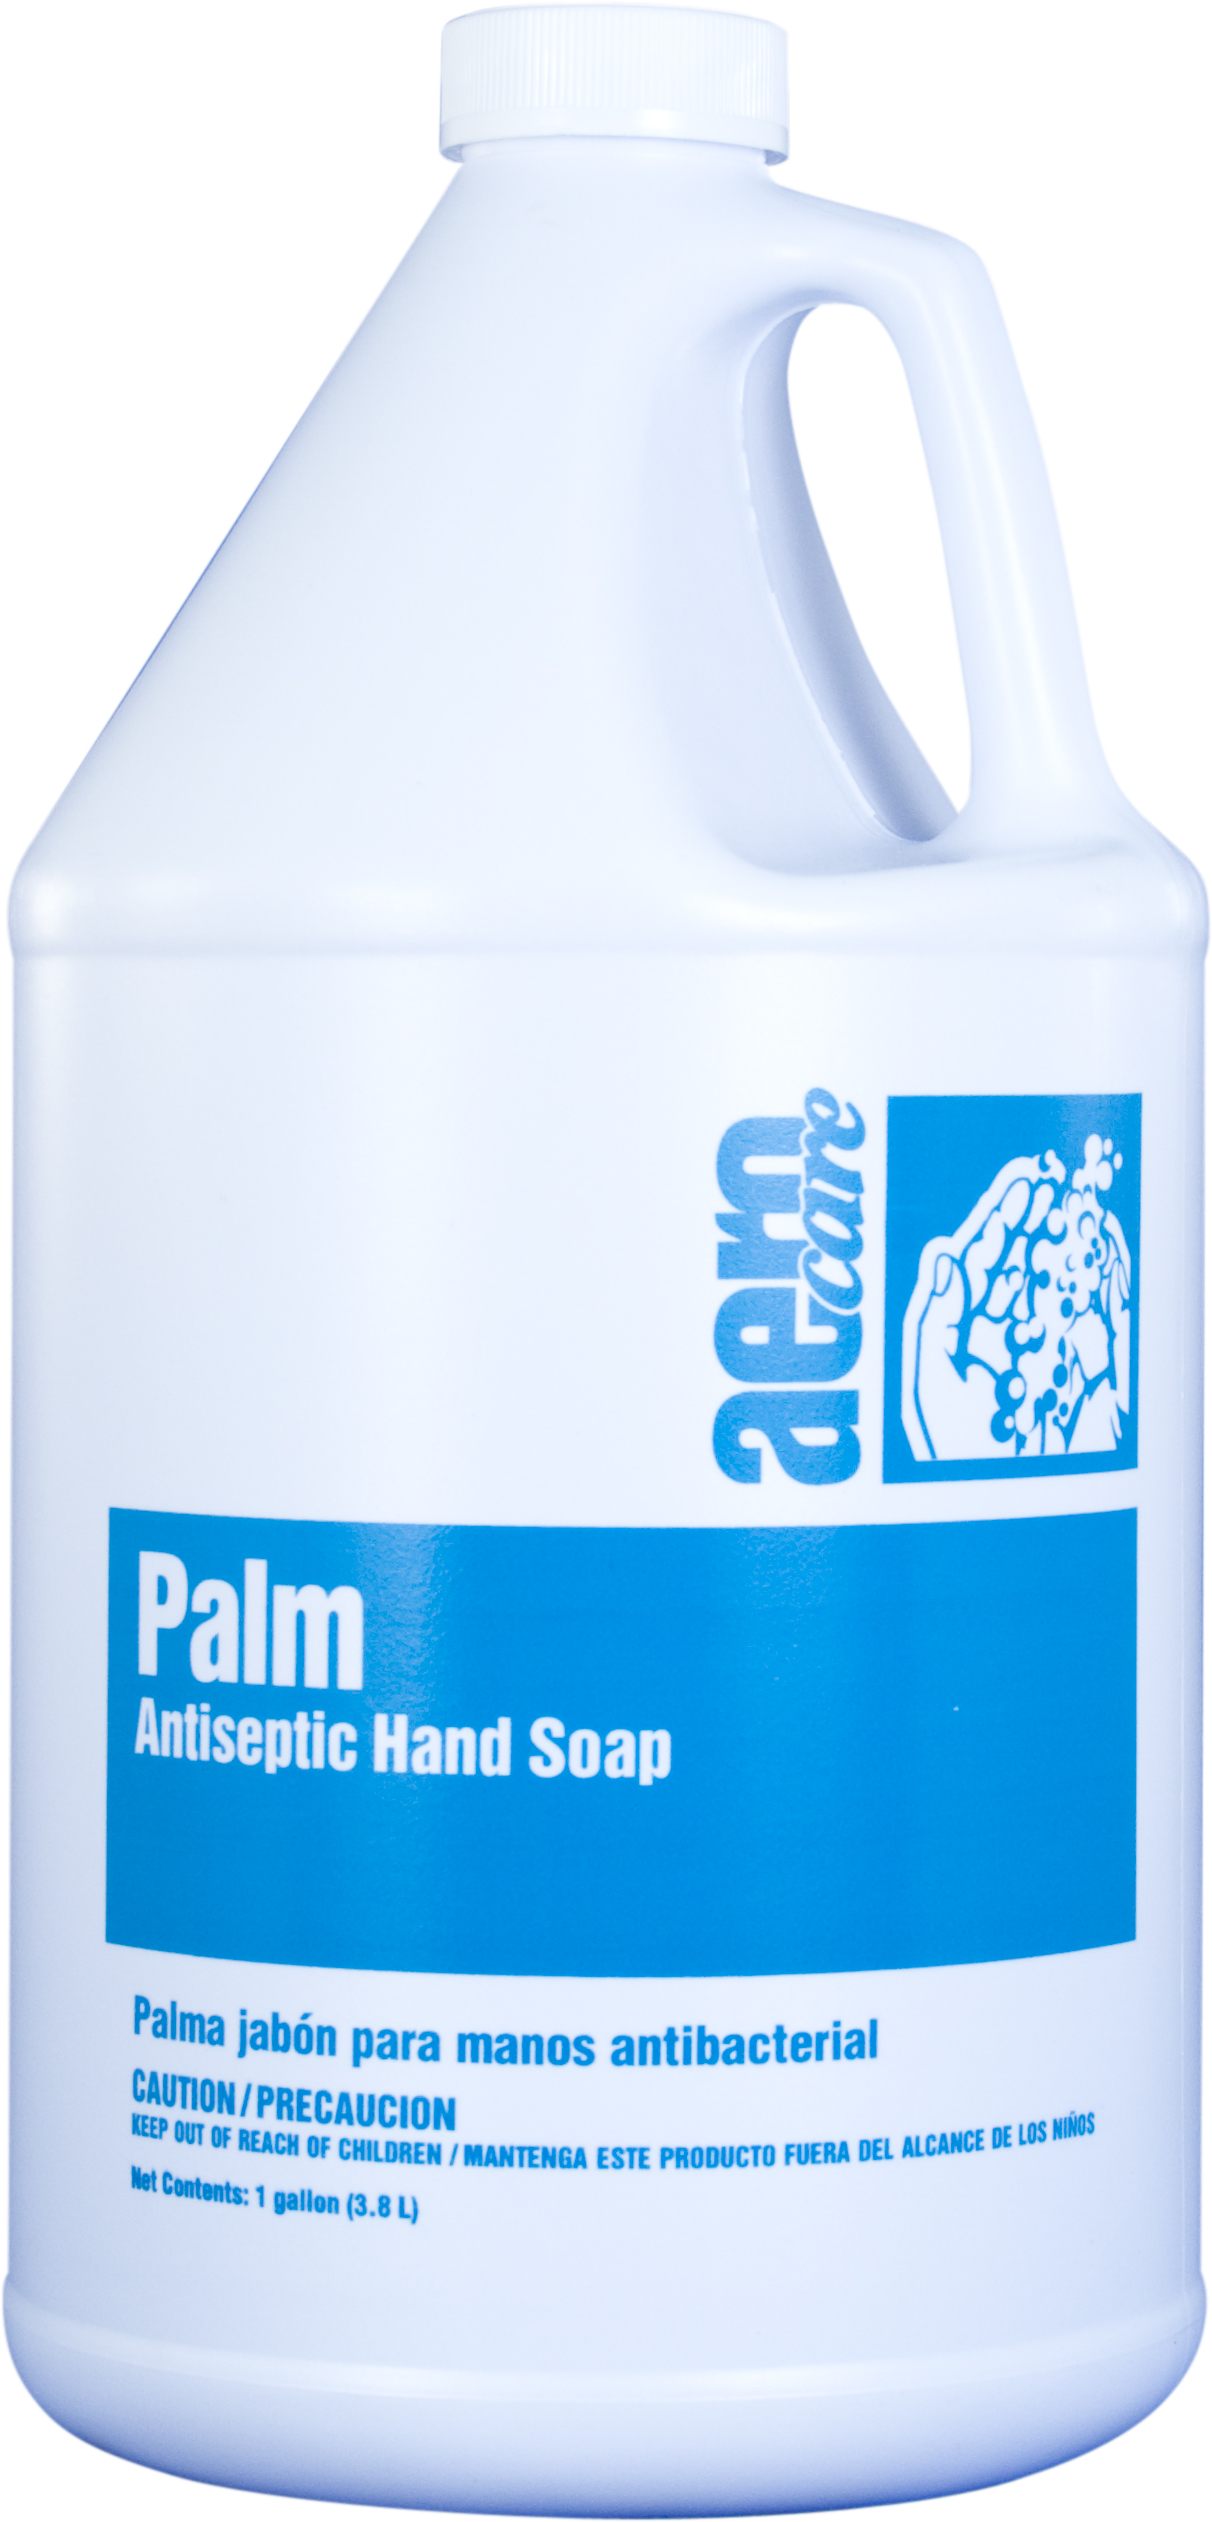 PALM ANTIBACTERIAL HAND SOAP
4-1 GALLON